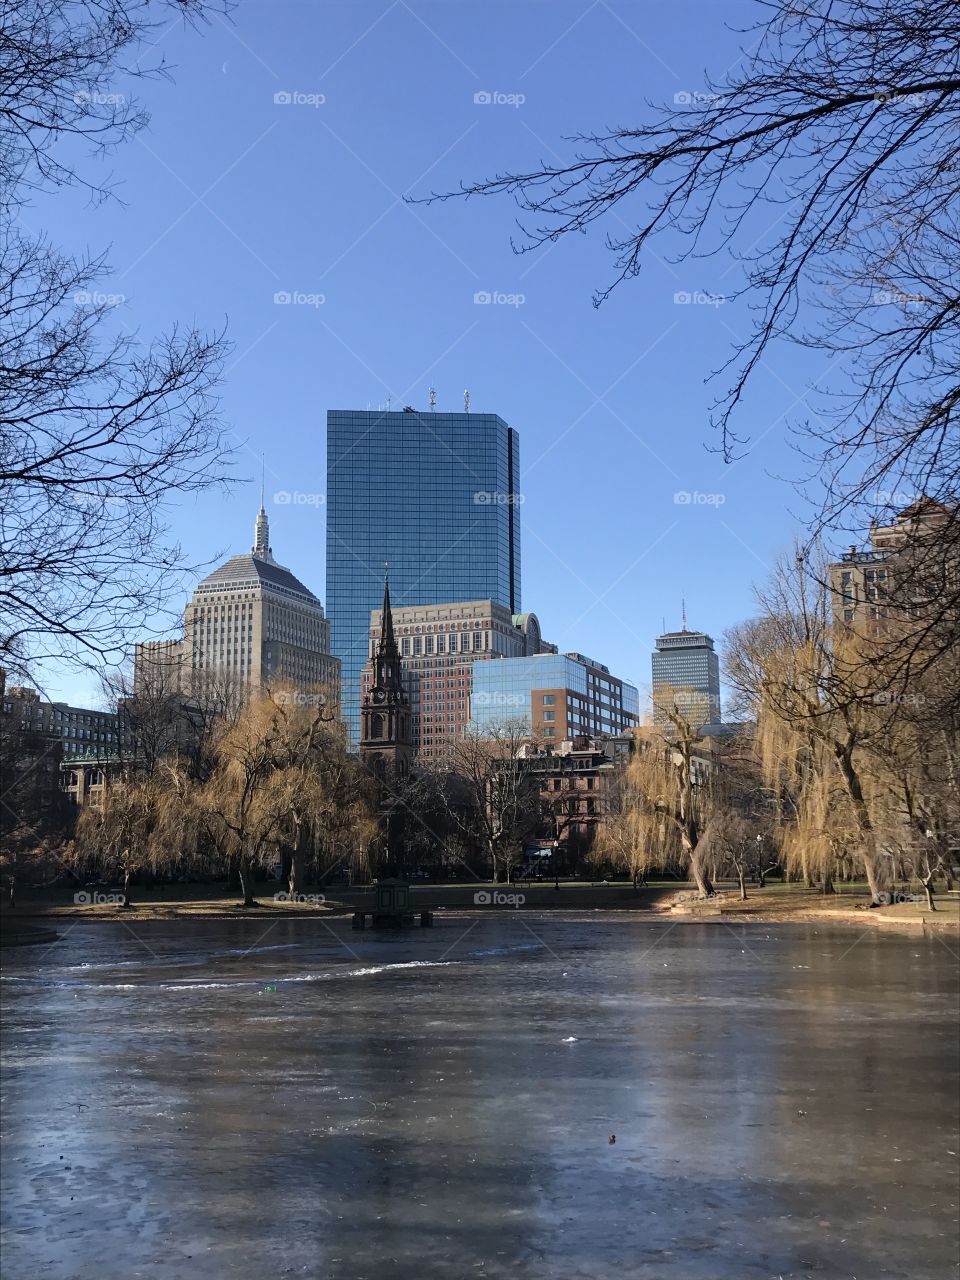 Winter in Boston - December 2016